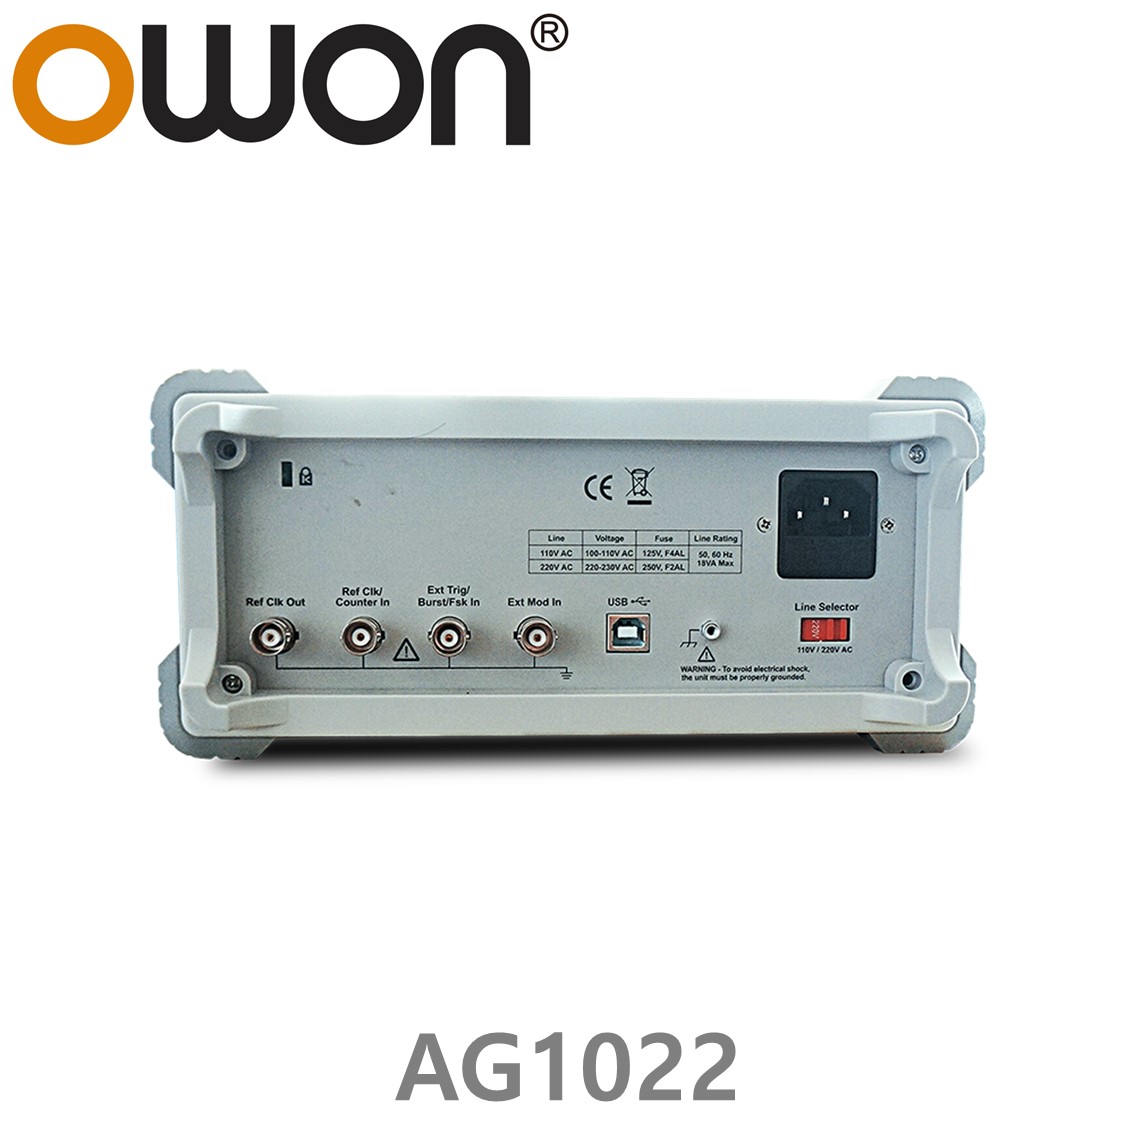 [ OWON ] AG1022 임의 파형발생기 2CH, 25MHz, 125MS/s